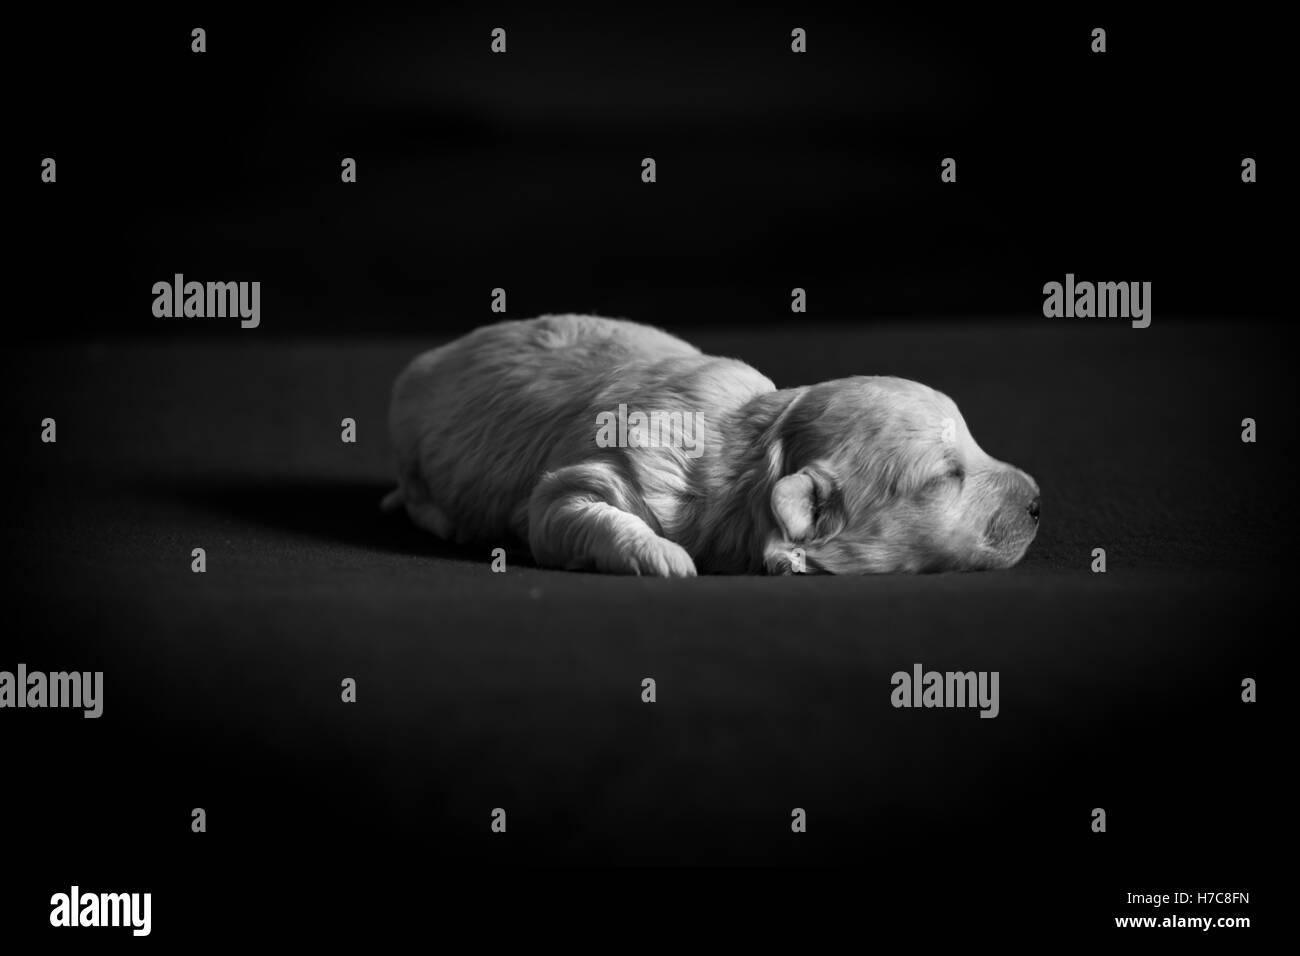 Sleeping Puppy Stock Photo